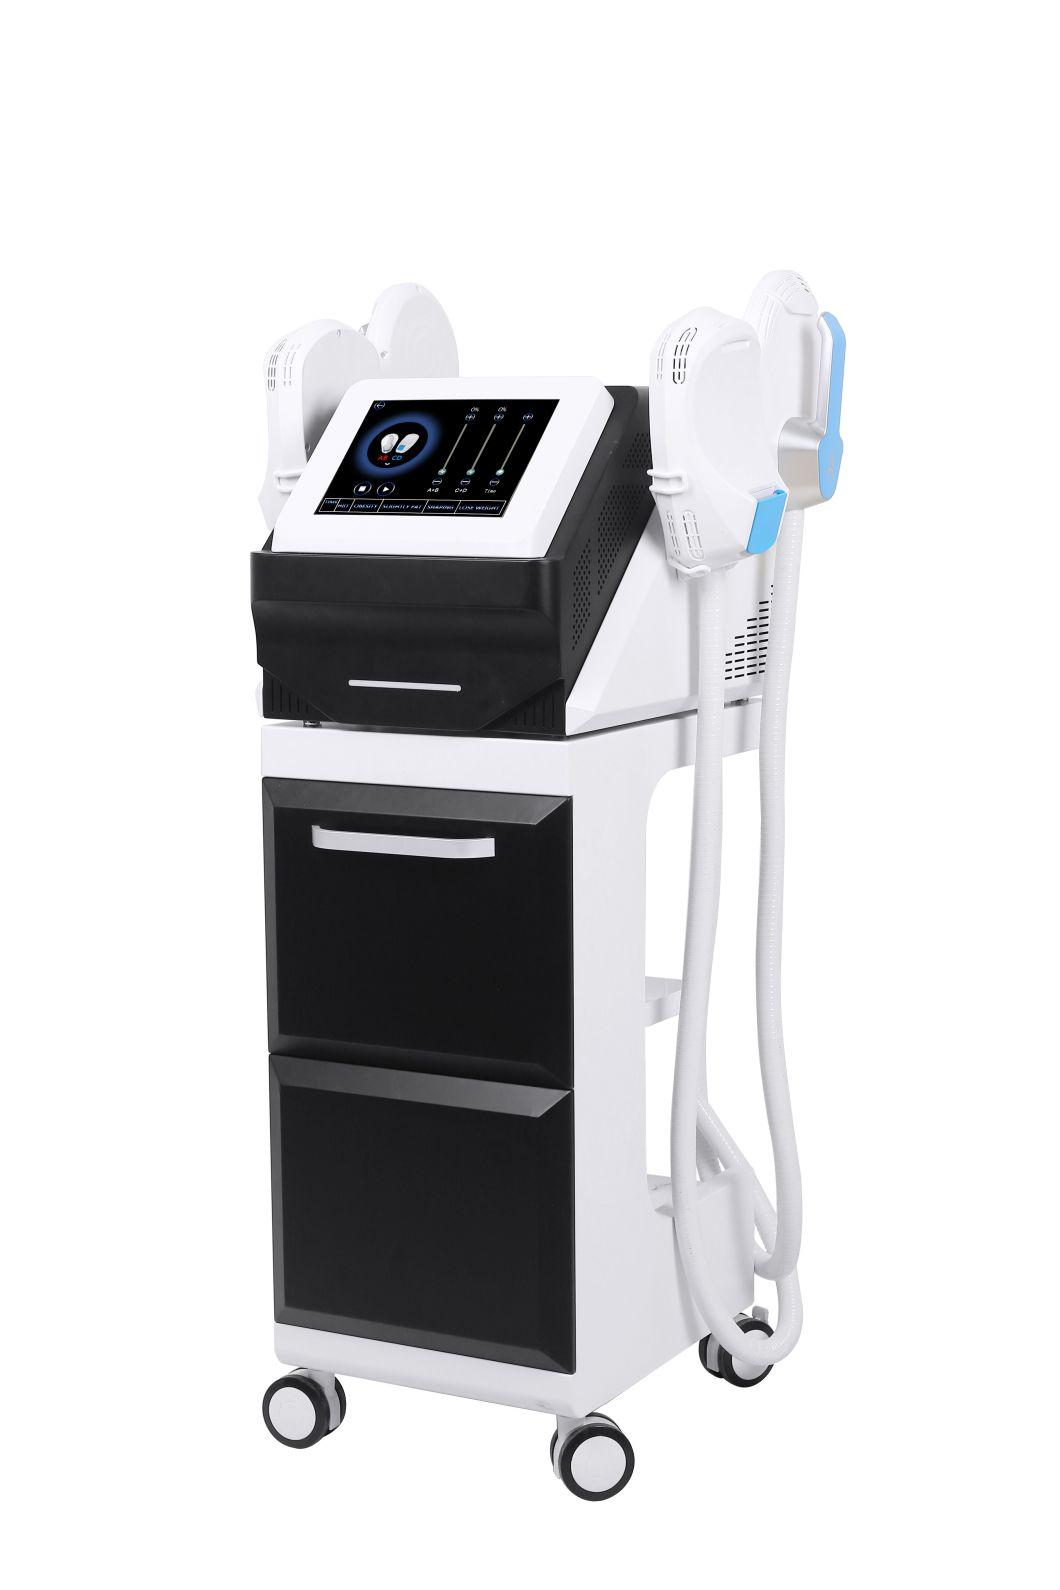 4 Cryo Handles EMS Slimming Cryotherapy Pad Beauty Cryo Fat Reduce Machine